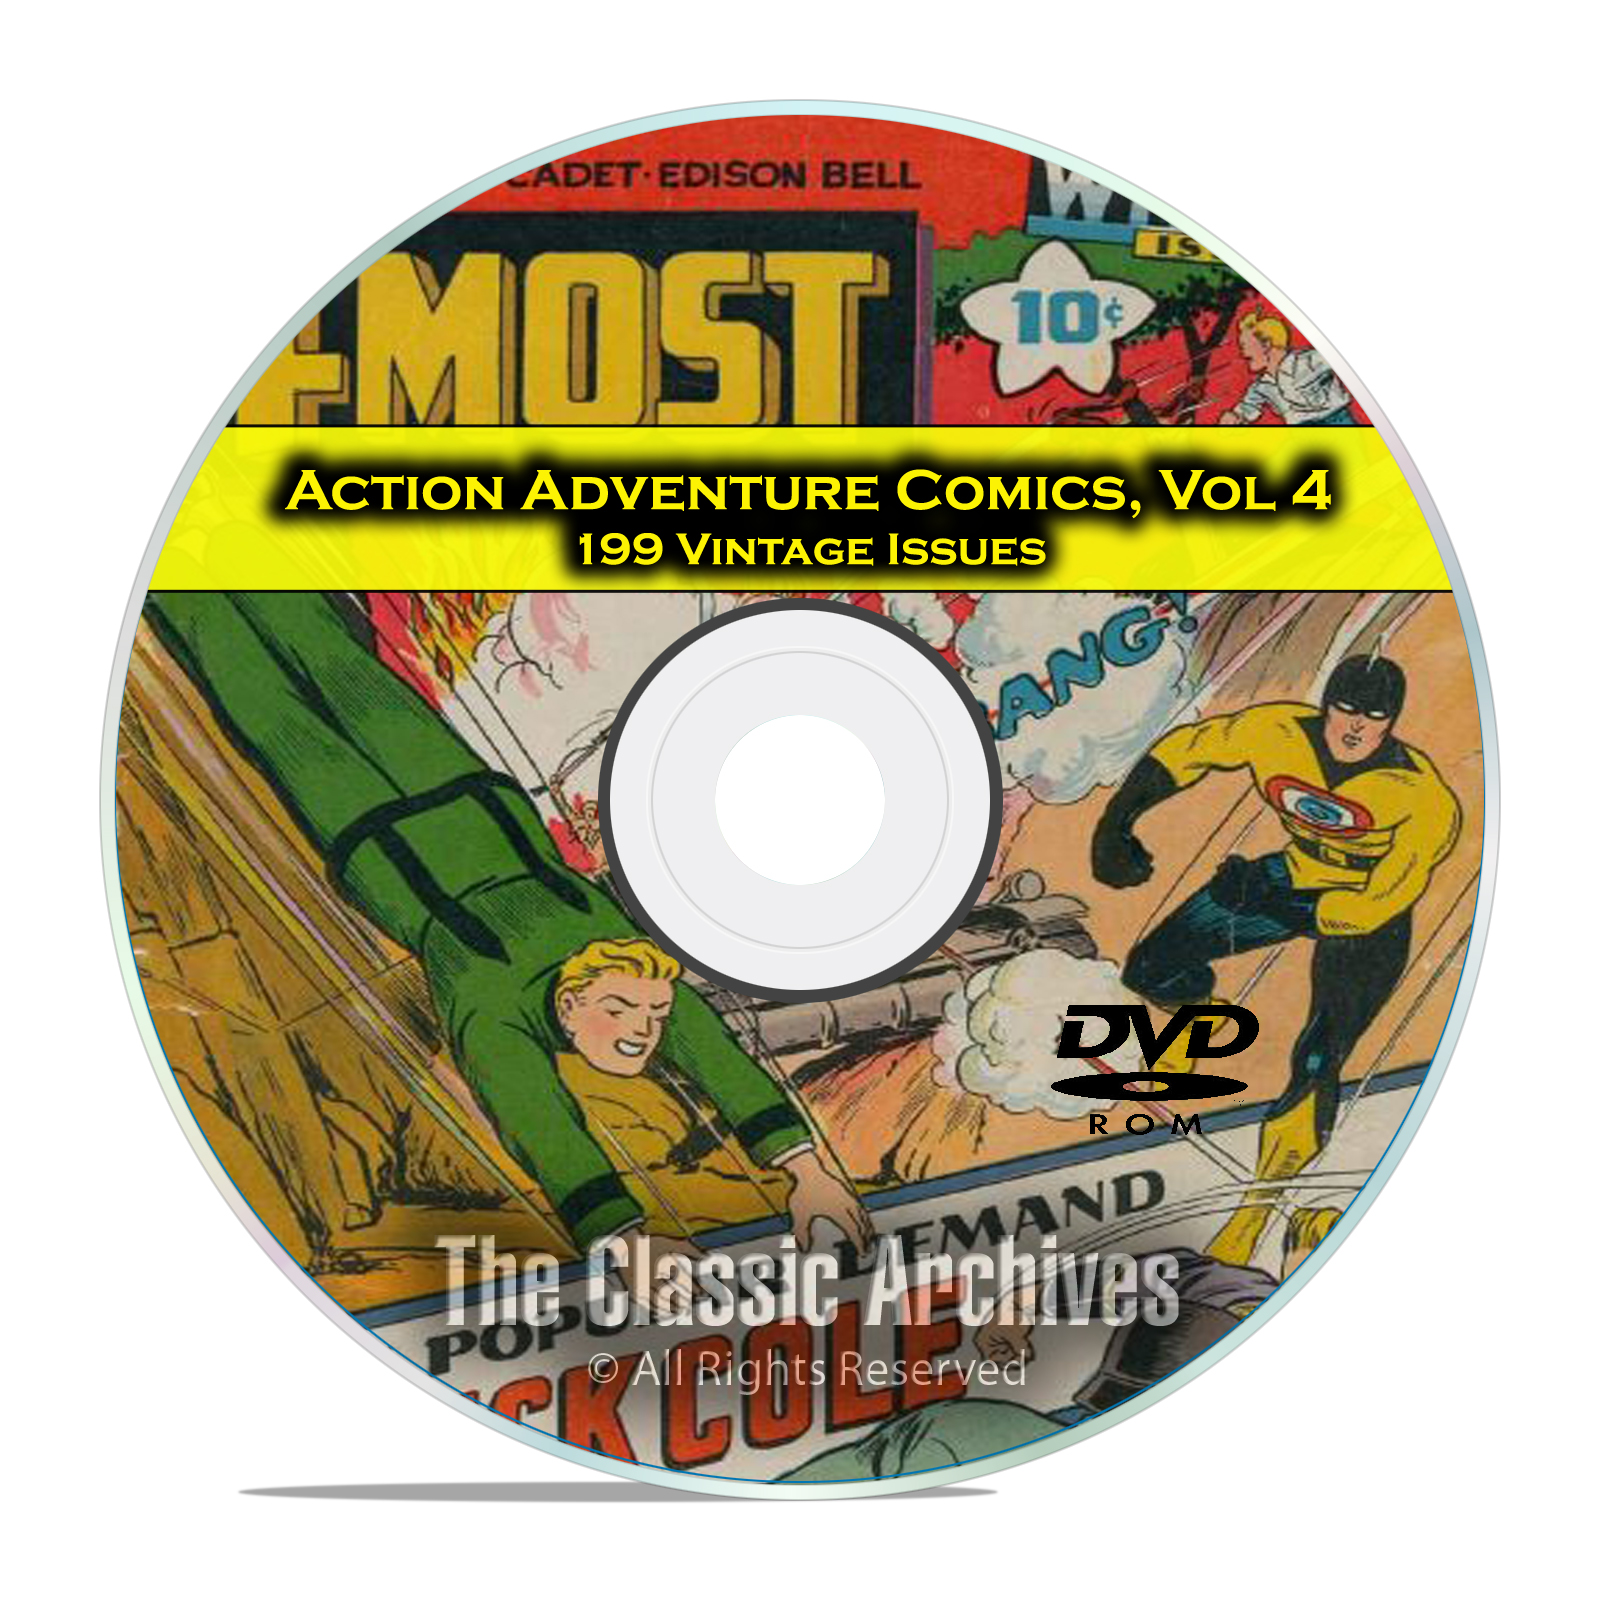 Action Adventure Comics Vol 4, Blue Bolt Picture News 4 Most Golden Age DVD - Click Image to Close